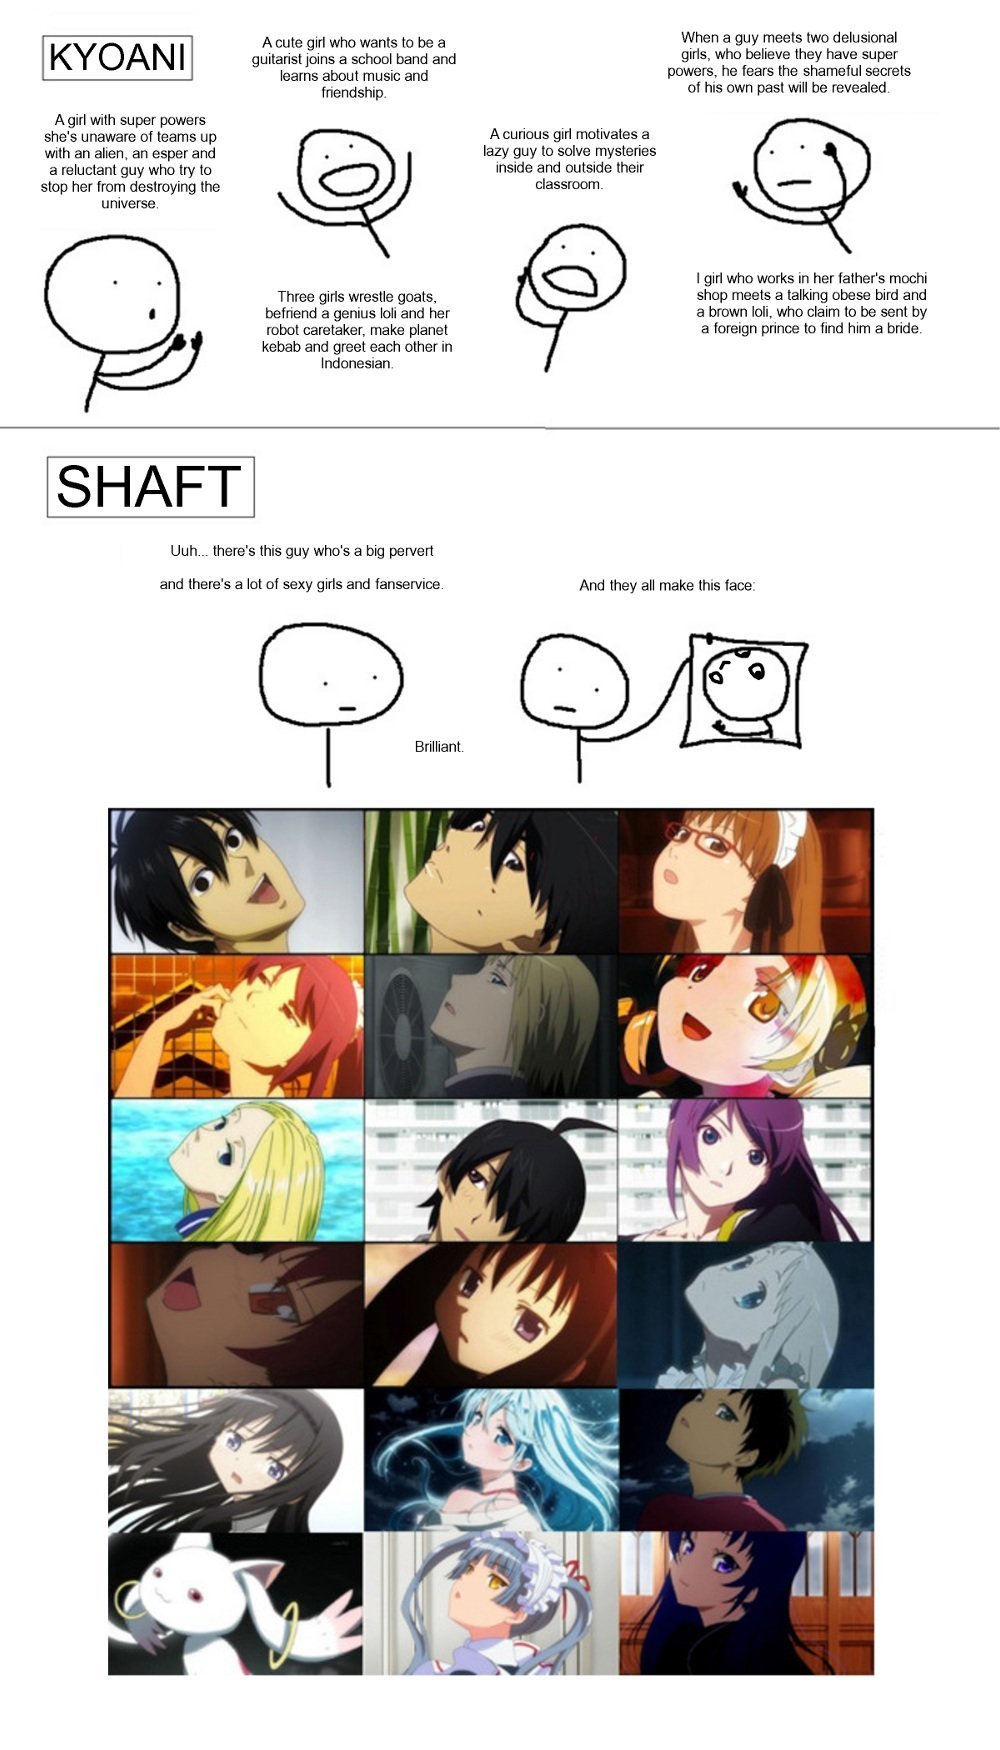 Kyoto Animation Vs. Shaft Animation